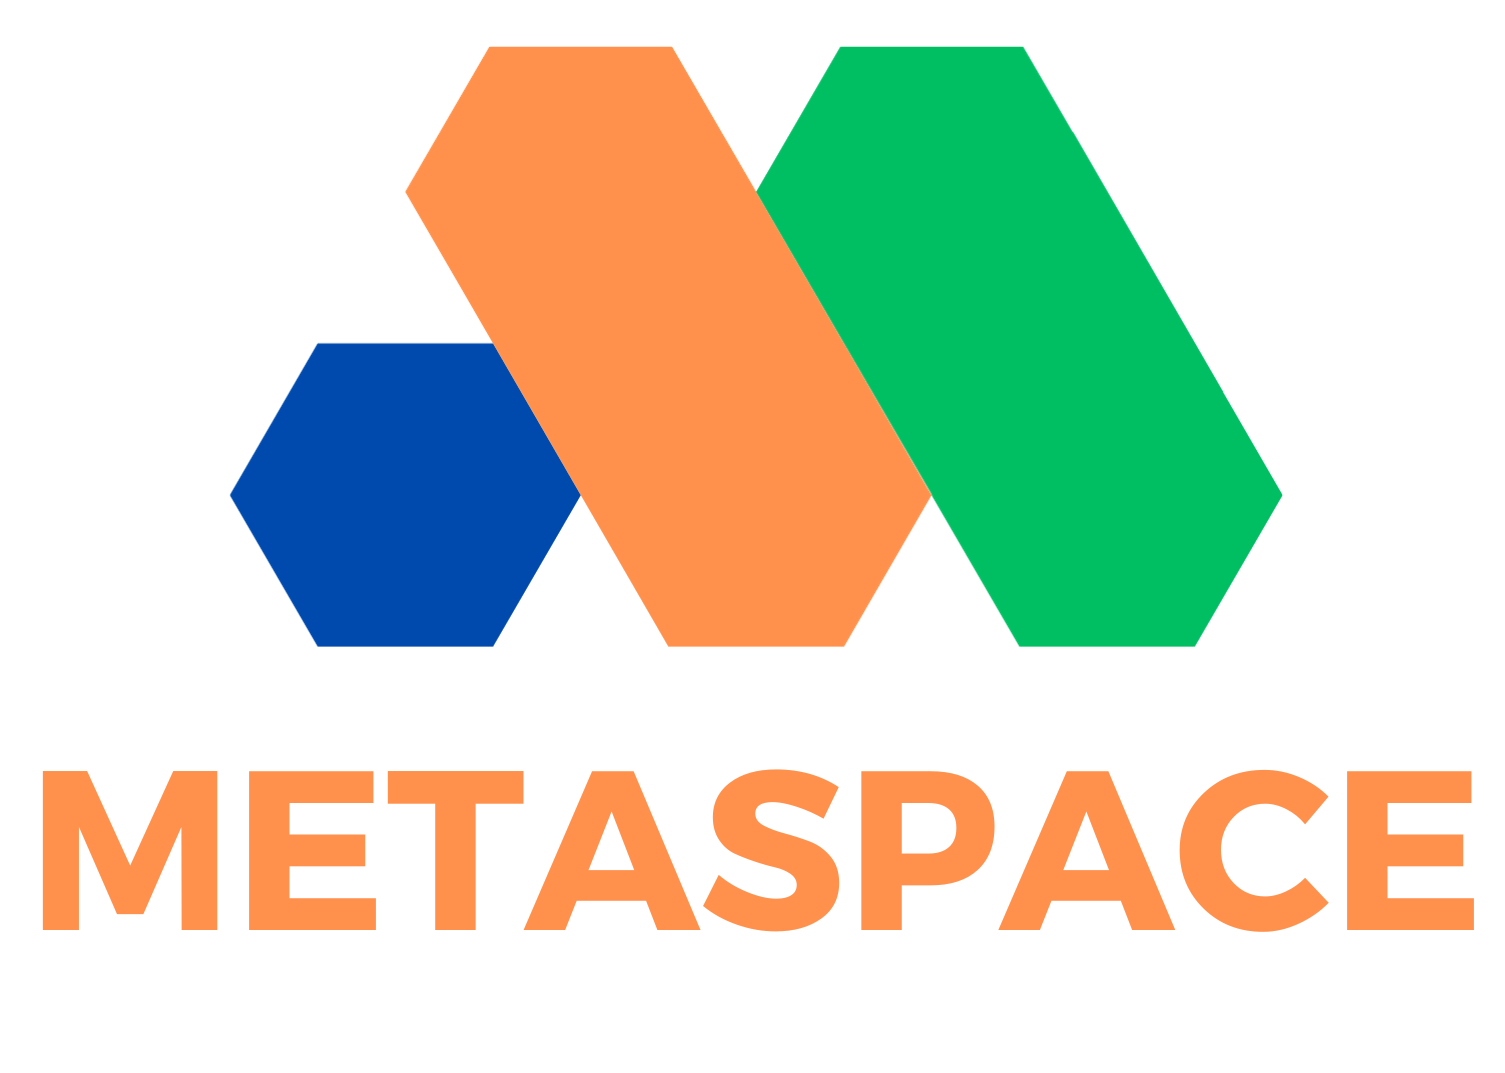 Metaspace